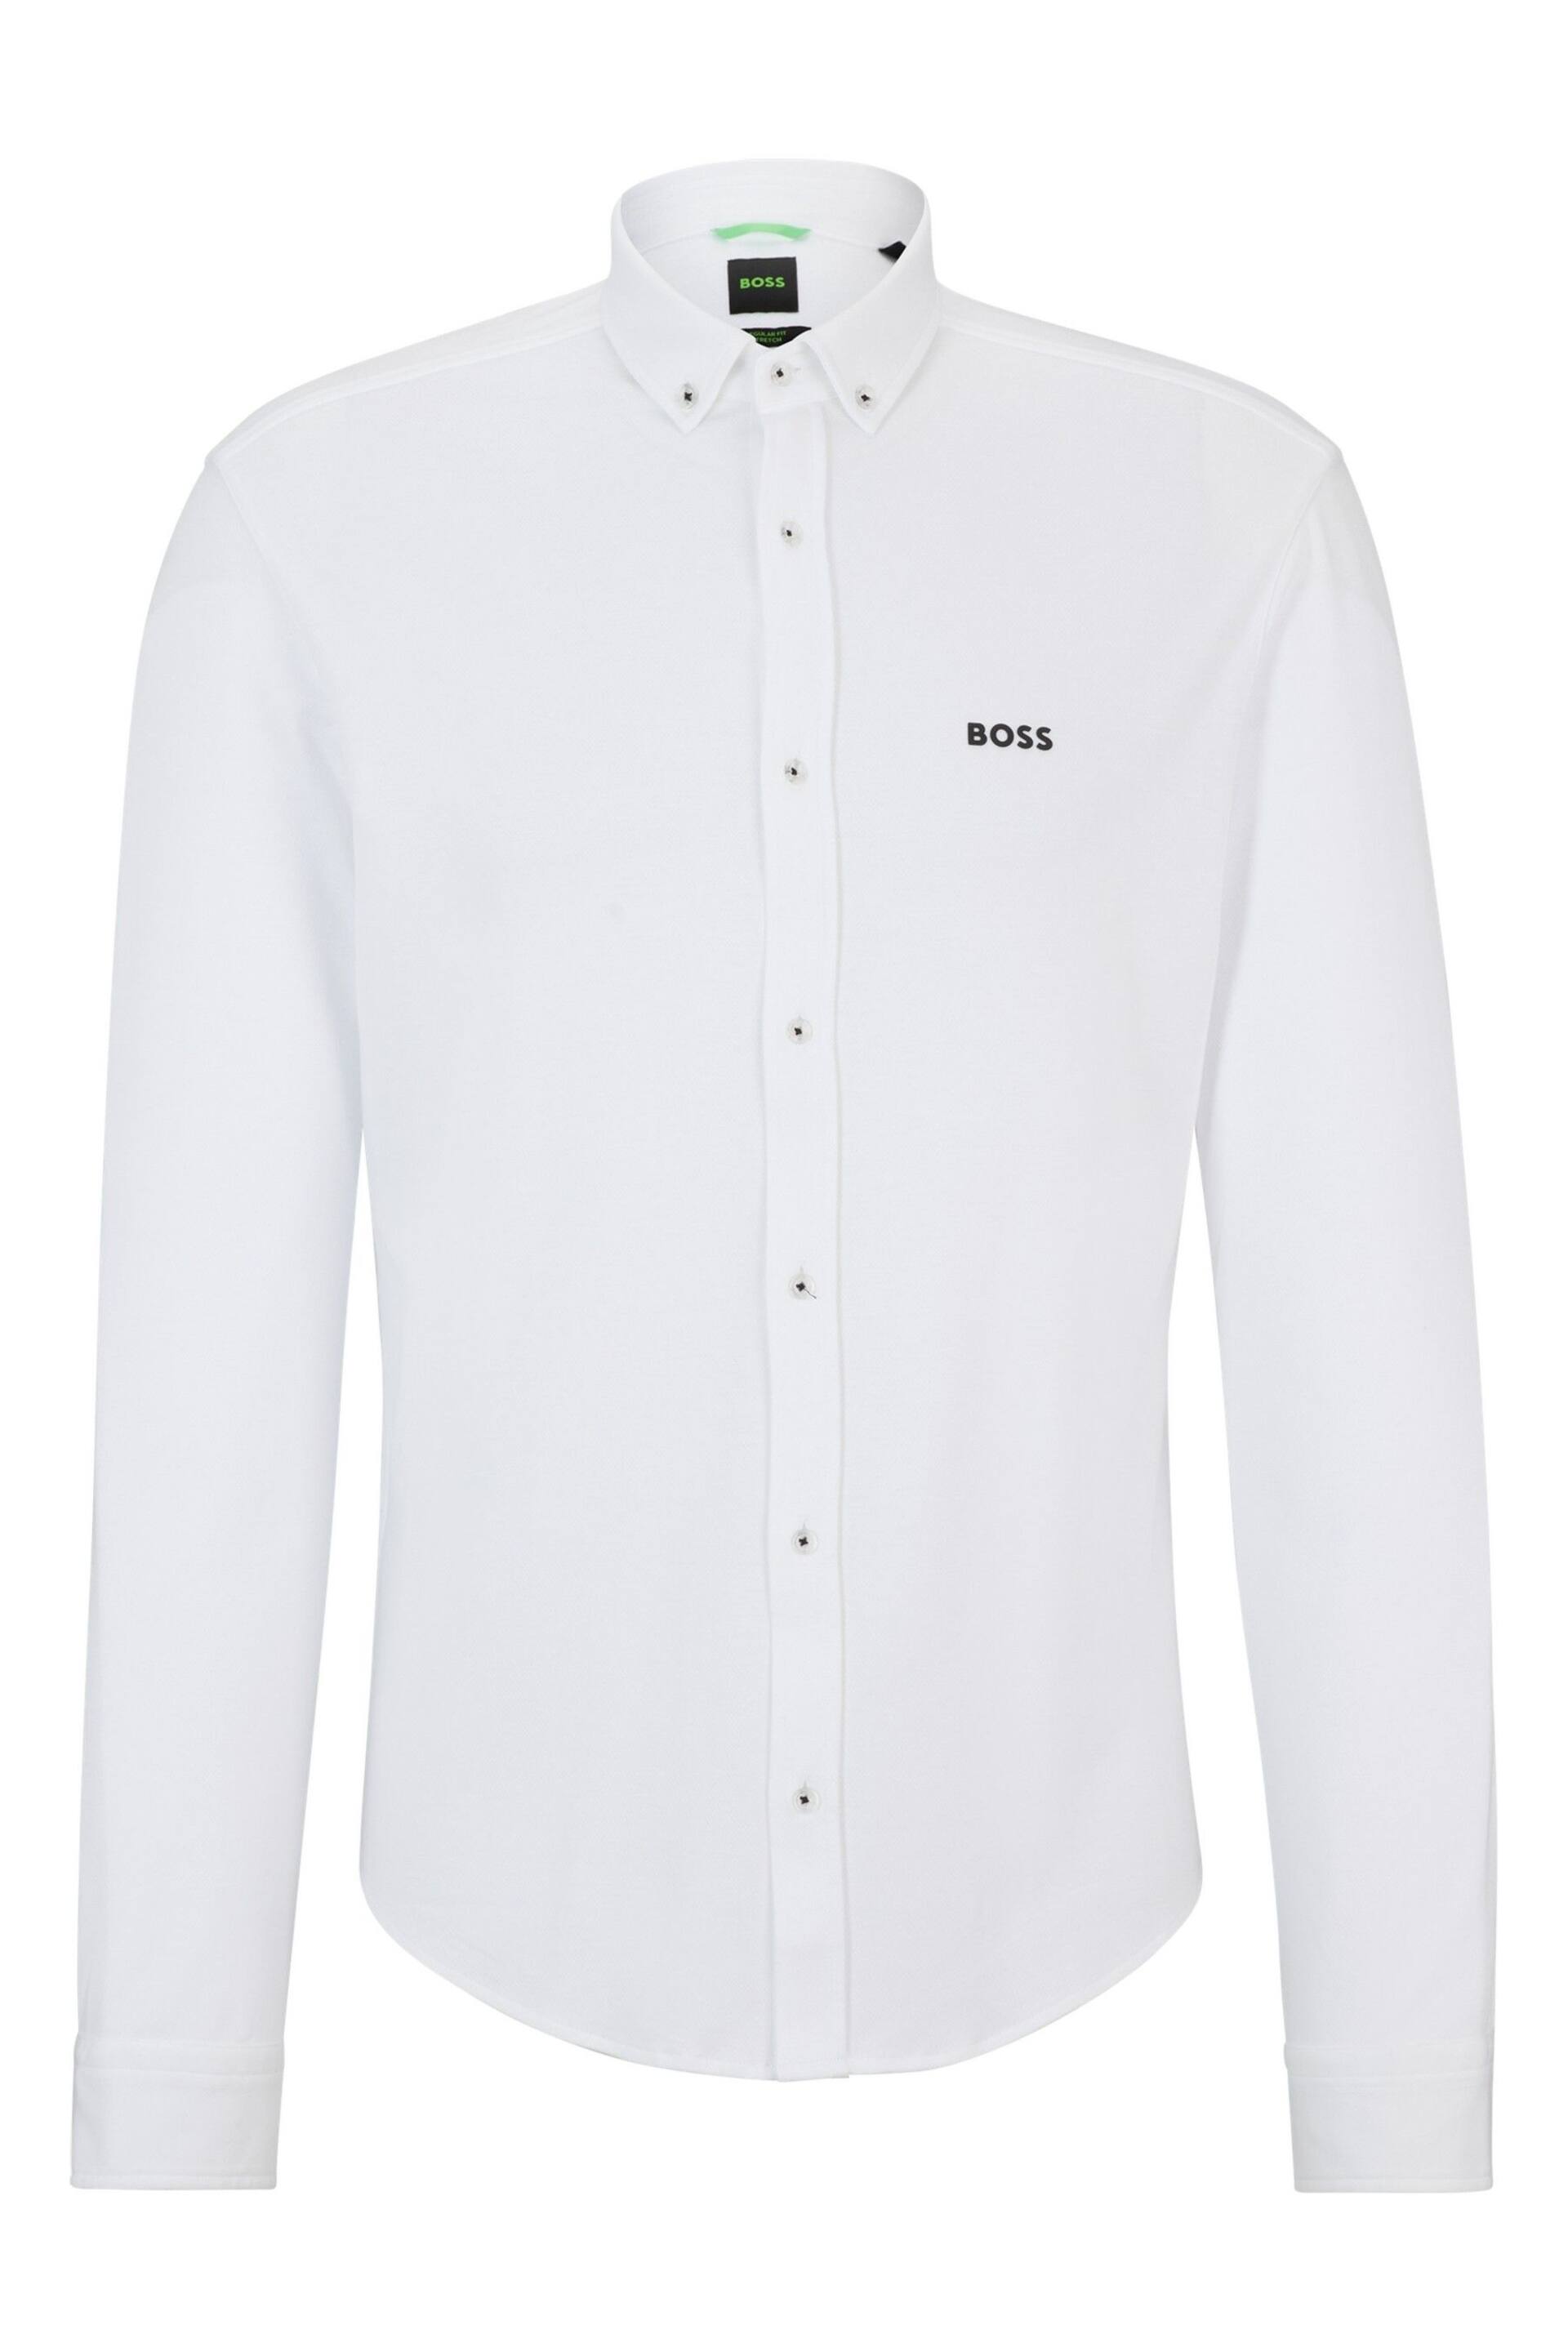 BOSS White Cotton Pique Regular Fit Shirt - Image 6 of 6